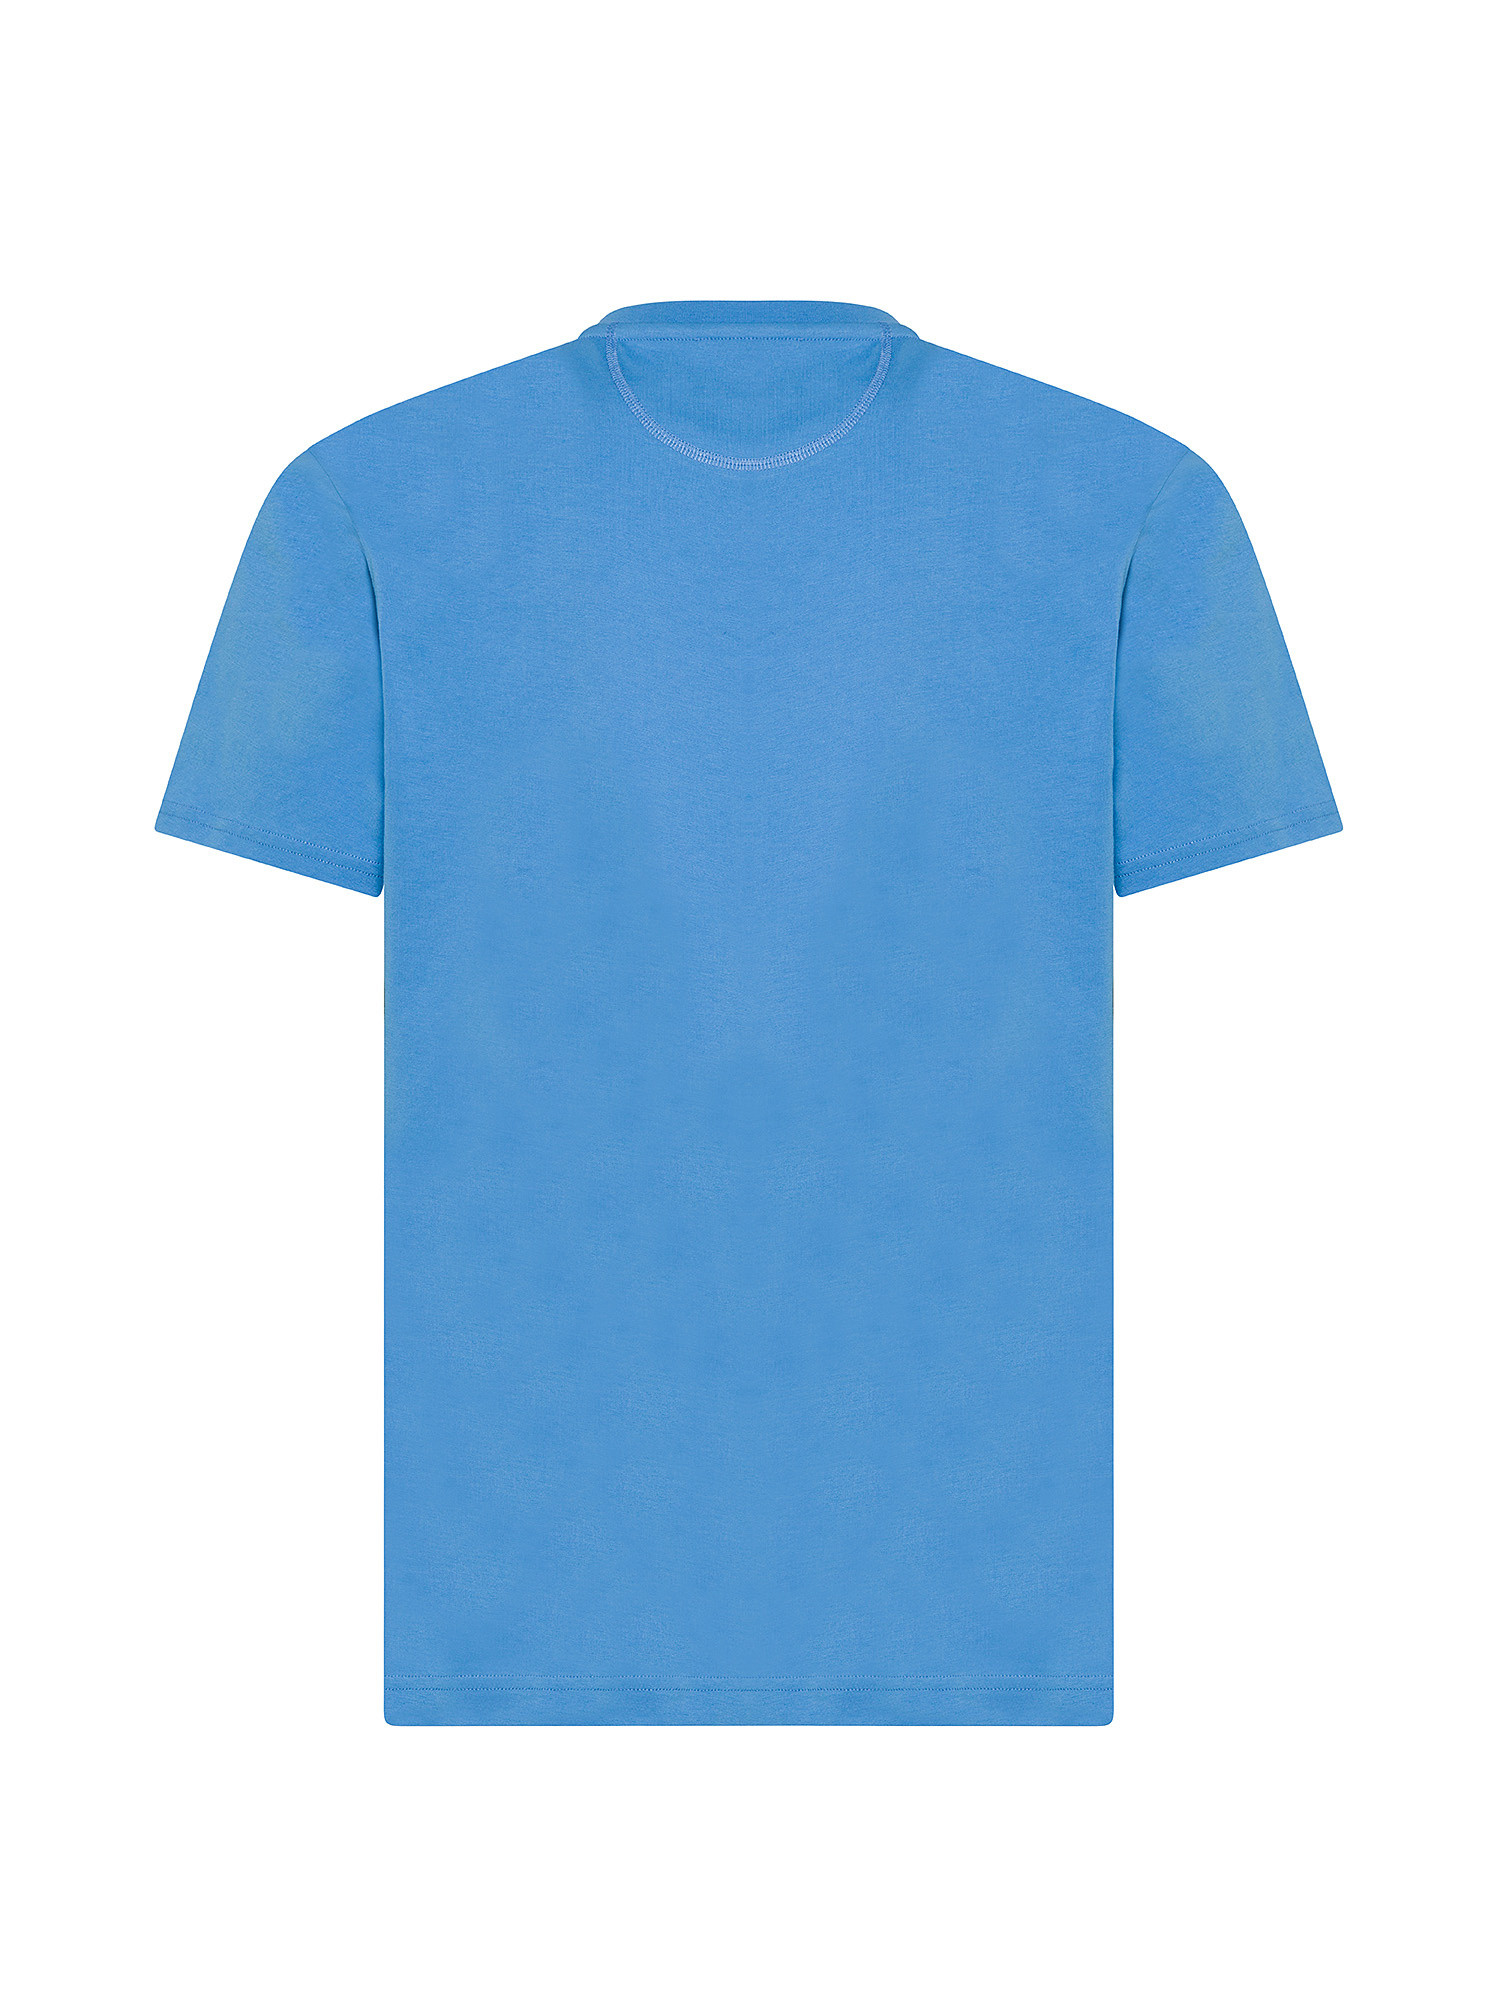 La Martina - Short-sleeved T-shirt in jersey cotton, Blue, large image number 1